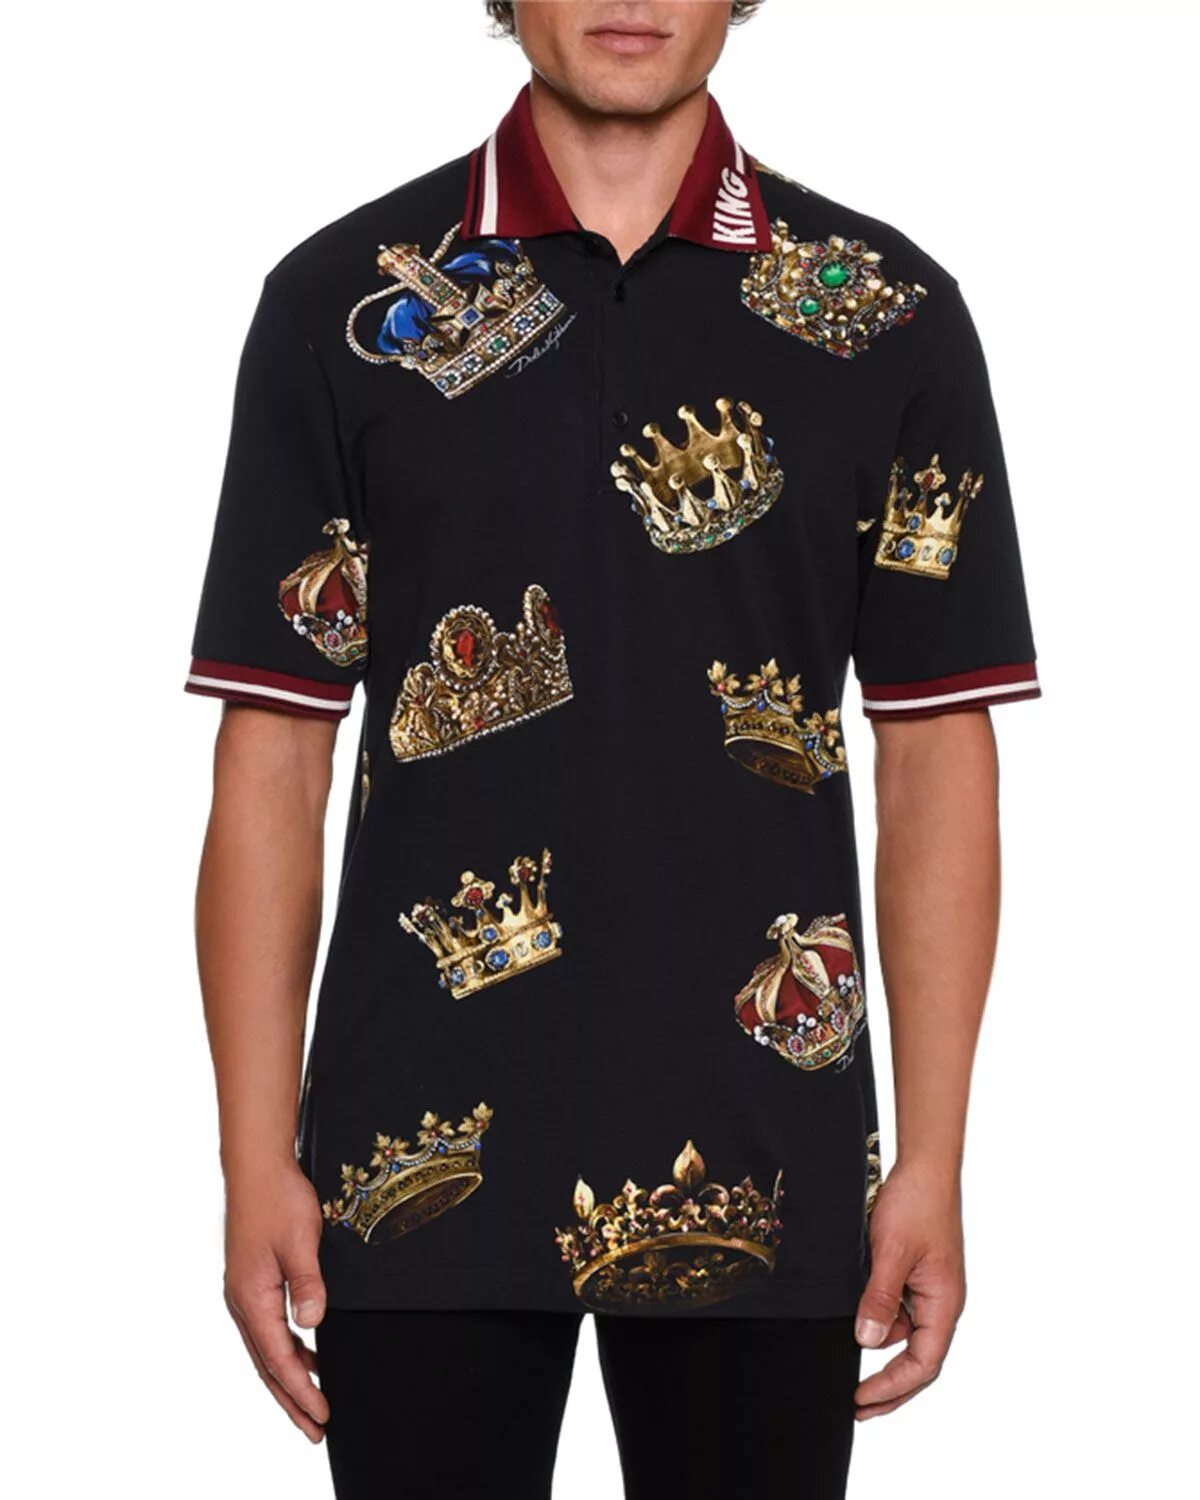 Дольче габбана корона цена. Dolce Gabbana Crown Shirt. Поло Dolce Gabbana. Dolce Gabbana g9m32. Dolce Gabbana King.